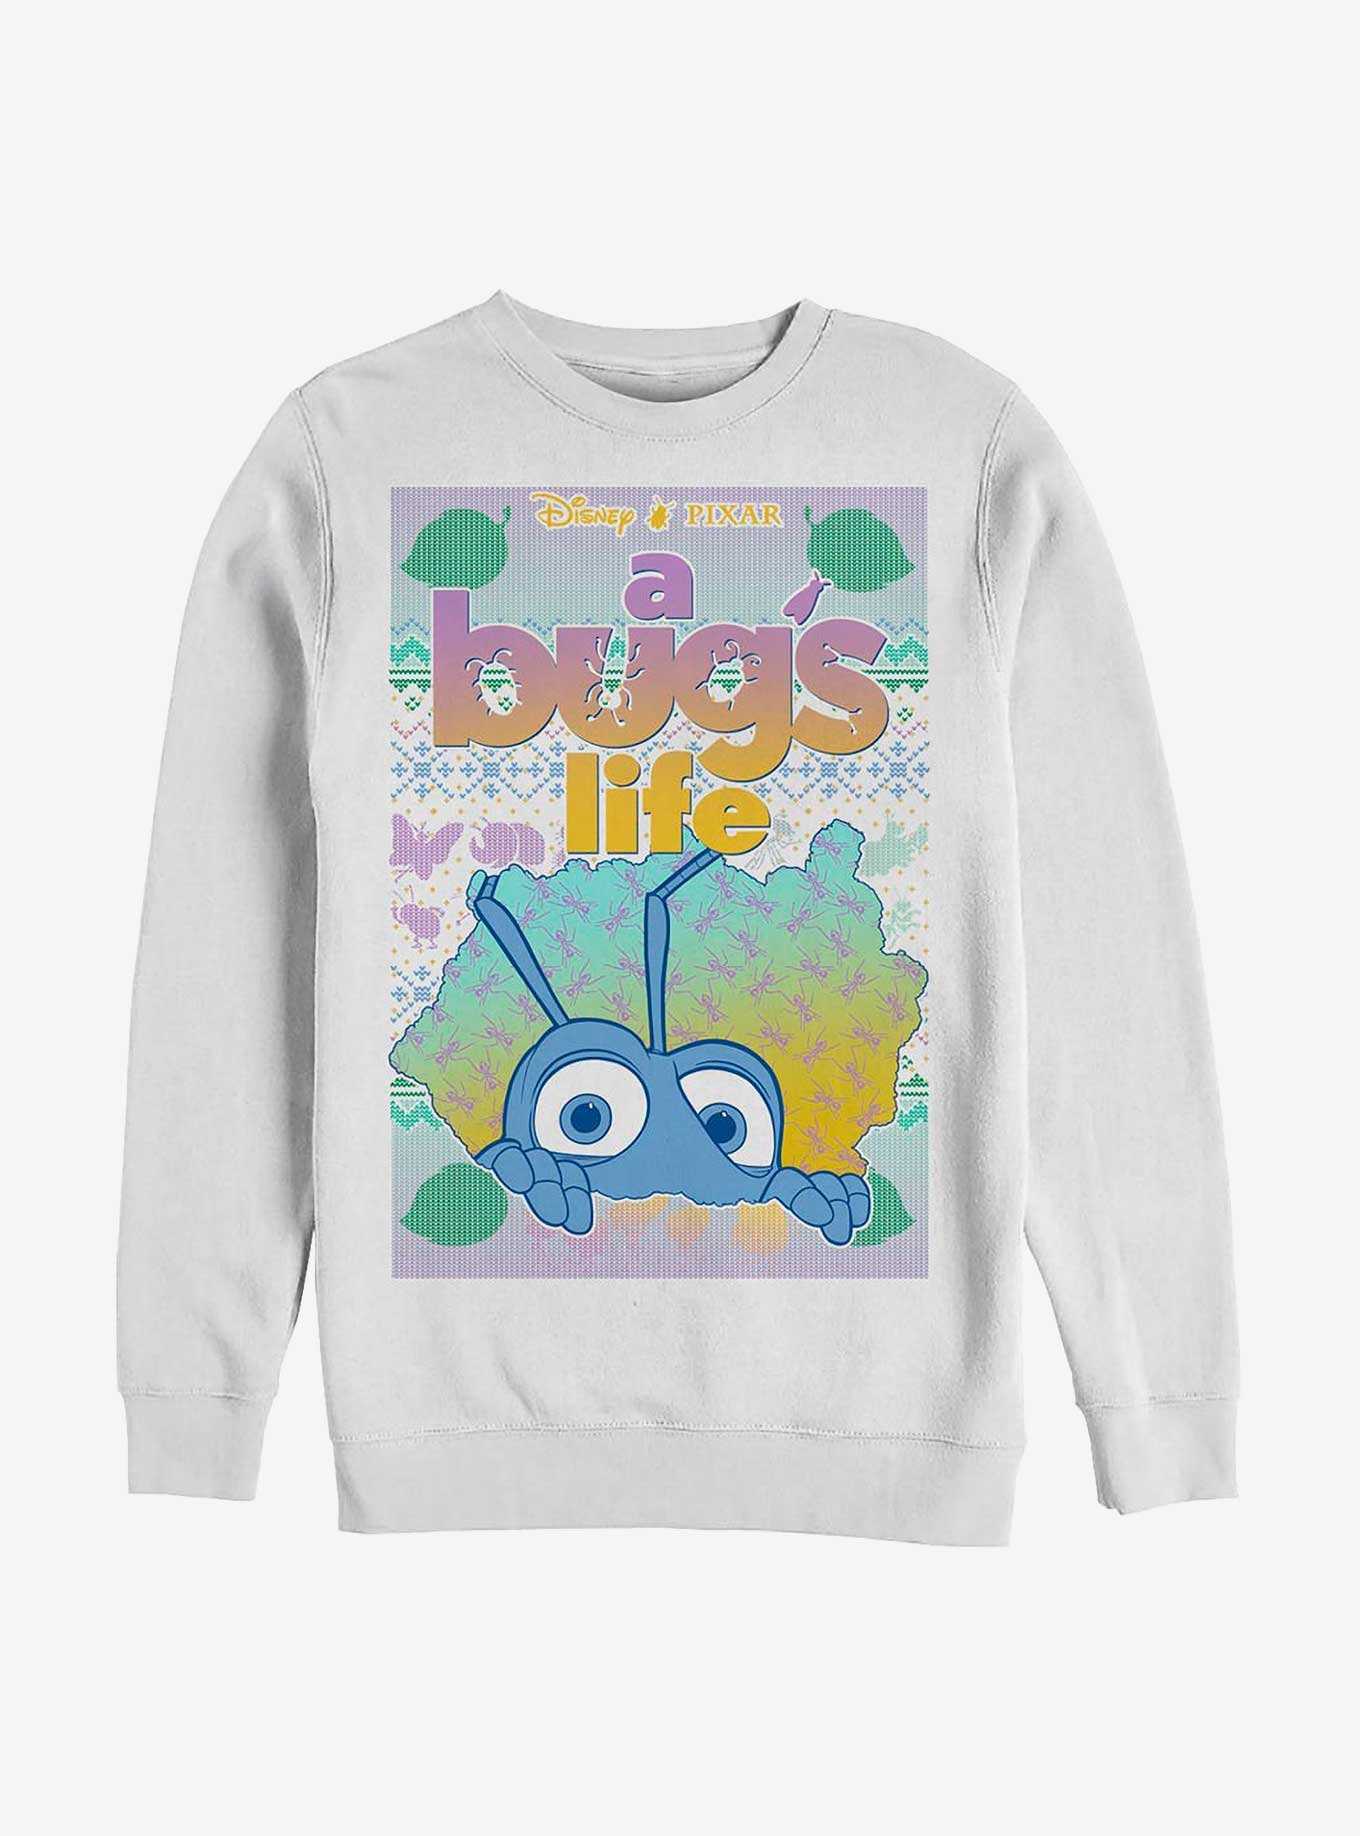 Disney Pixar A Bug's Life Flik Sweater Style Sweatshirt, , hi-res